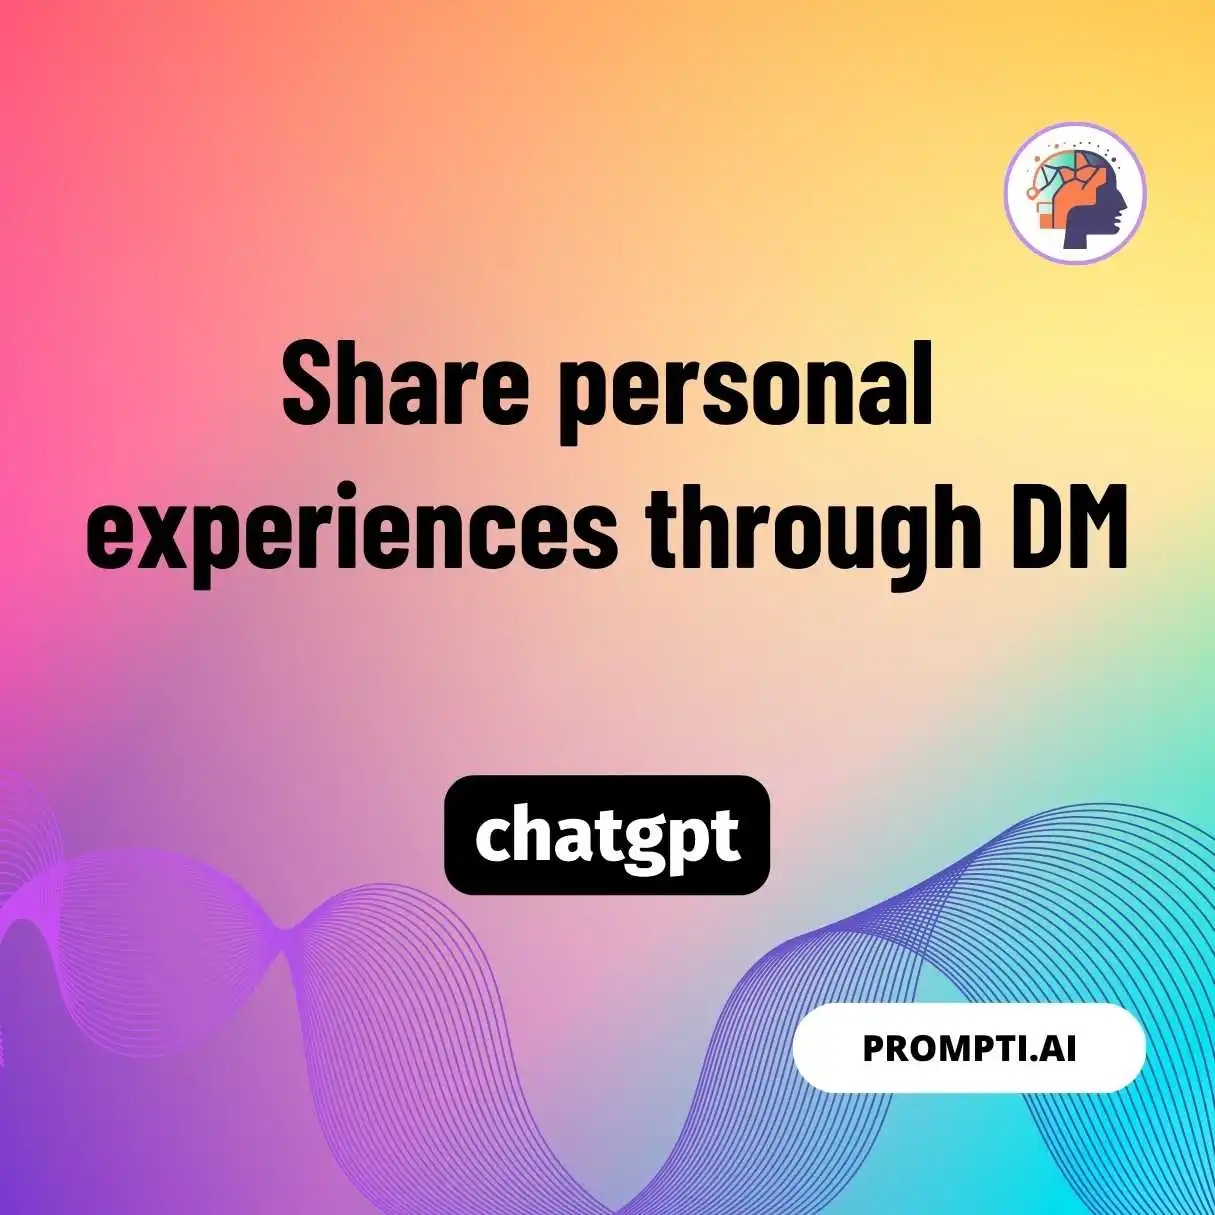 Share personal experiences through DM